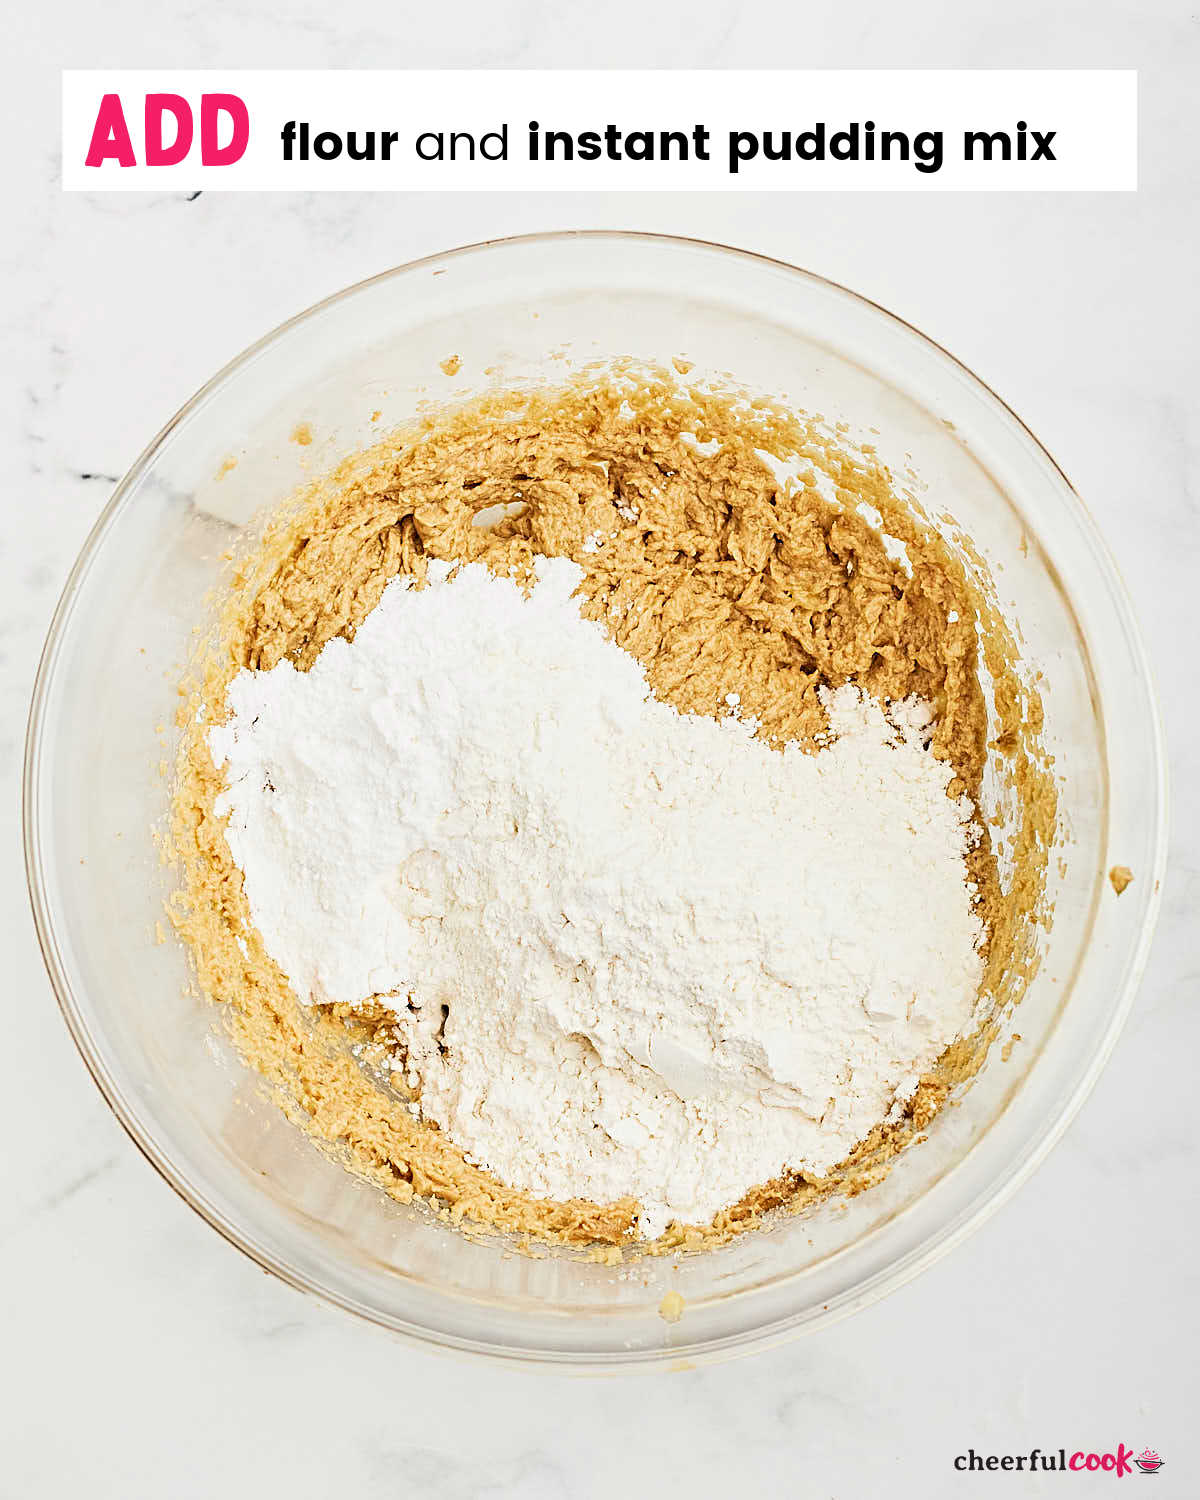 Process Step: Add flour and banana pudding mix.